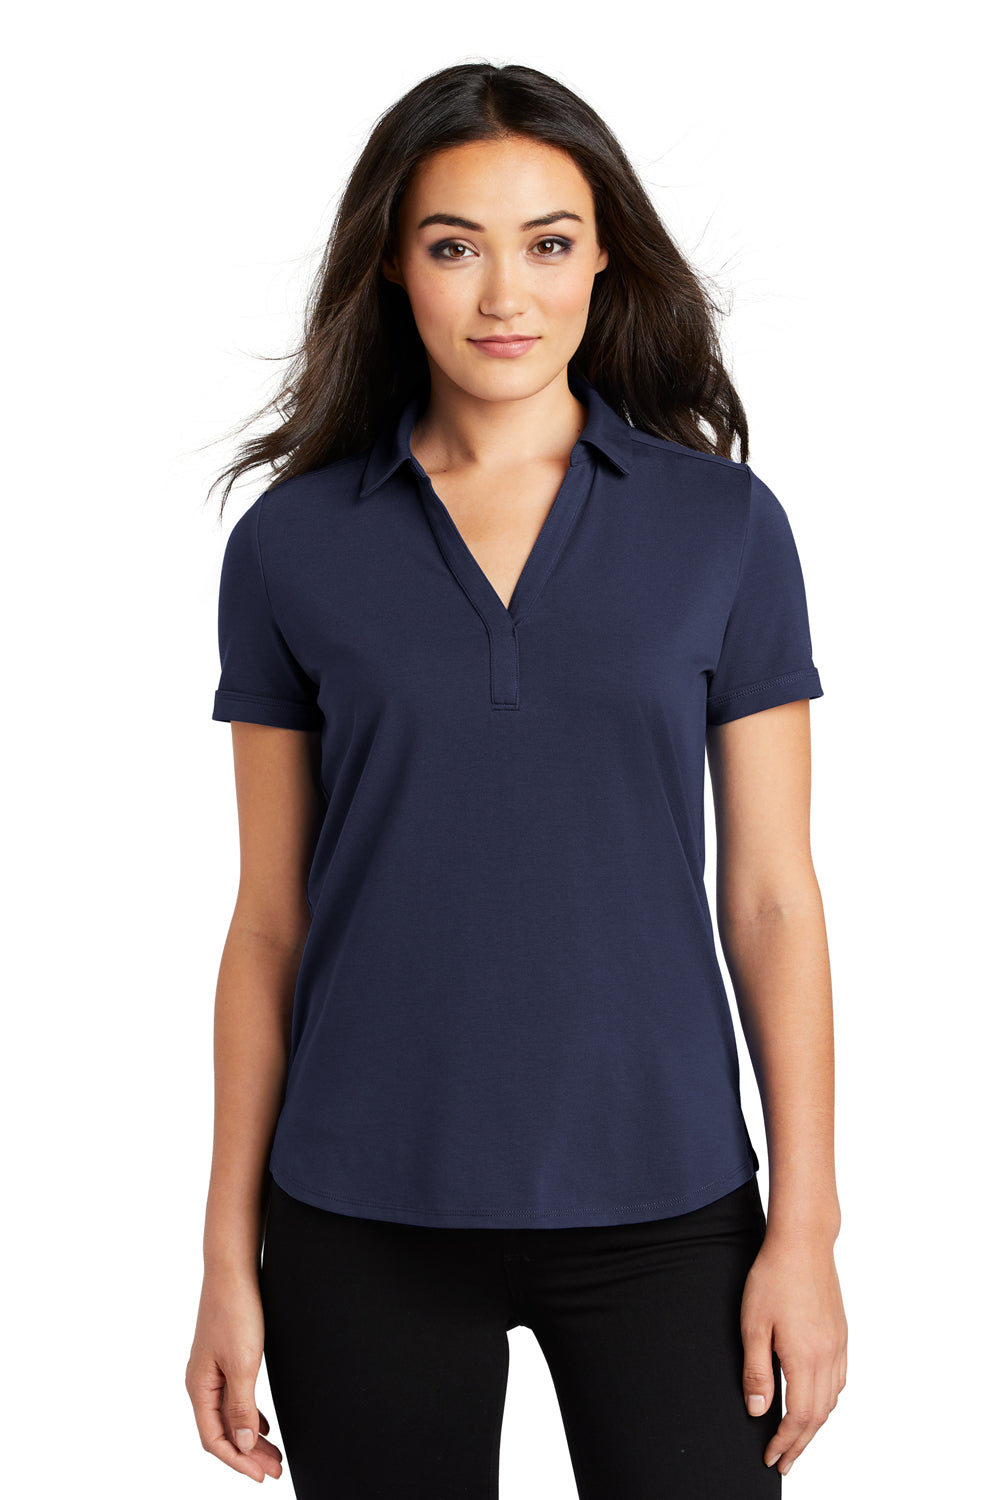 Ogio LOG138 Womens Limit Moisture Wicking Short Sleeve Polo Shirt Navy Blue Front